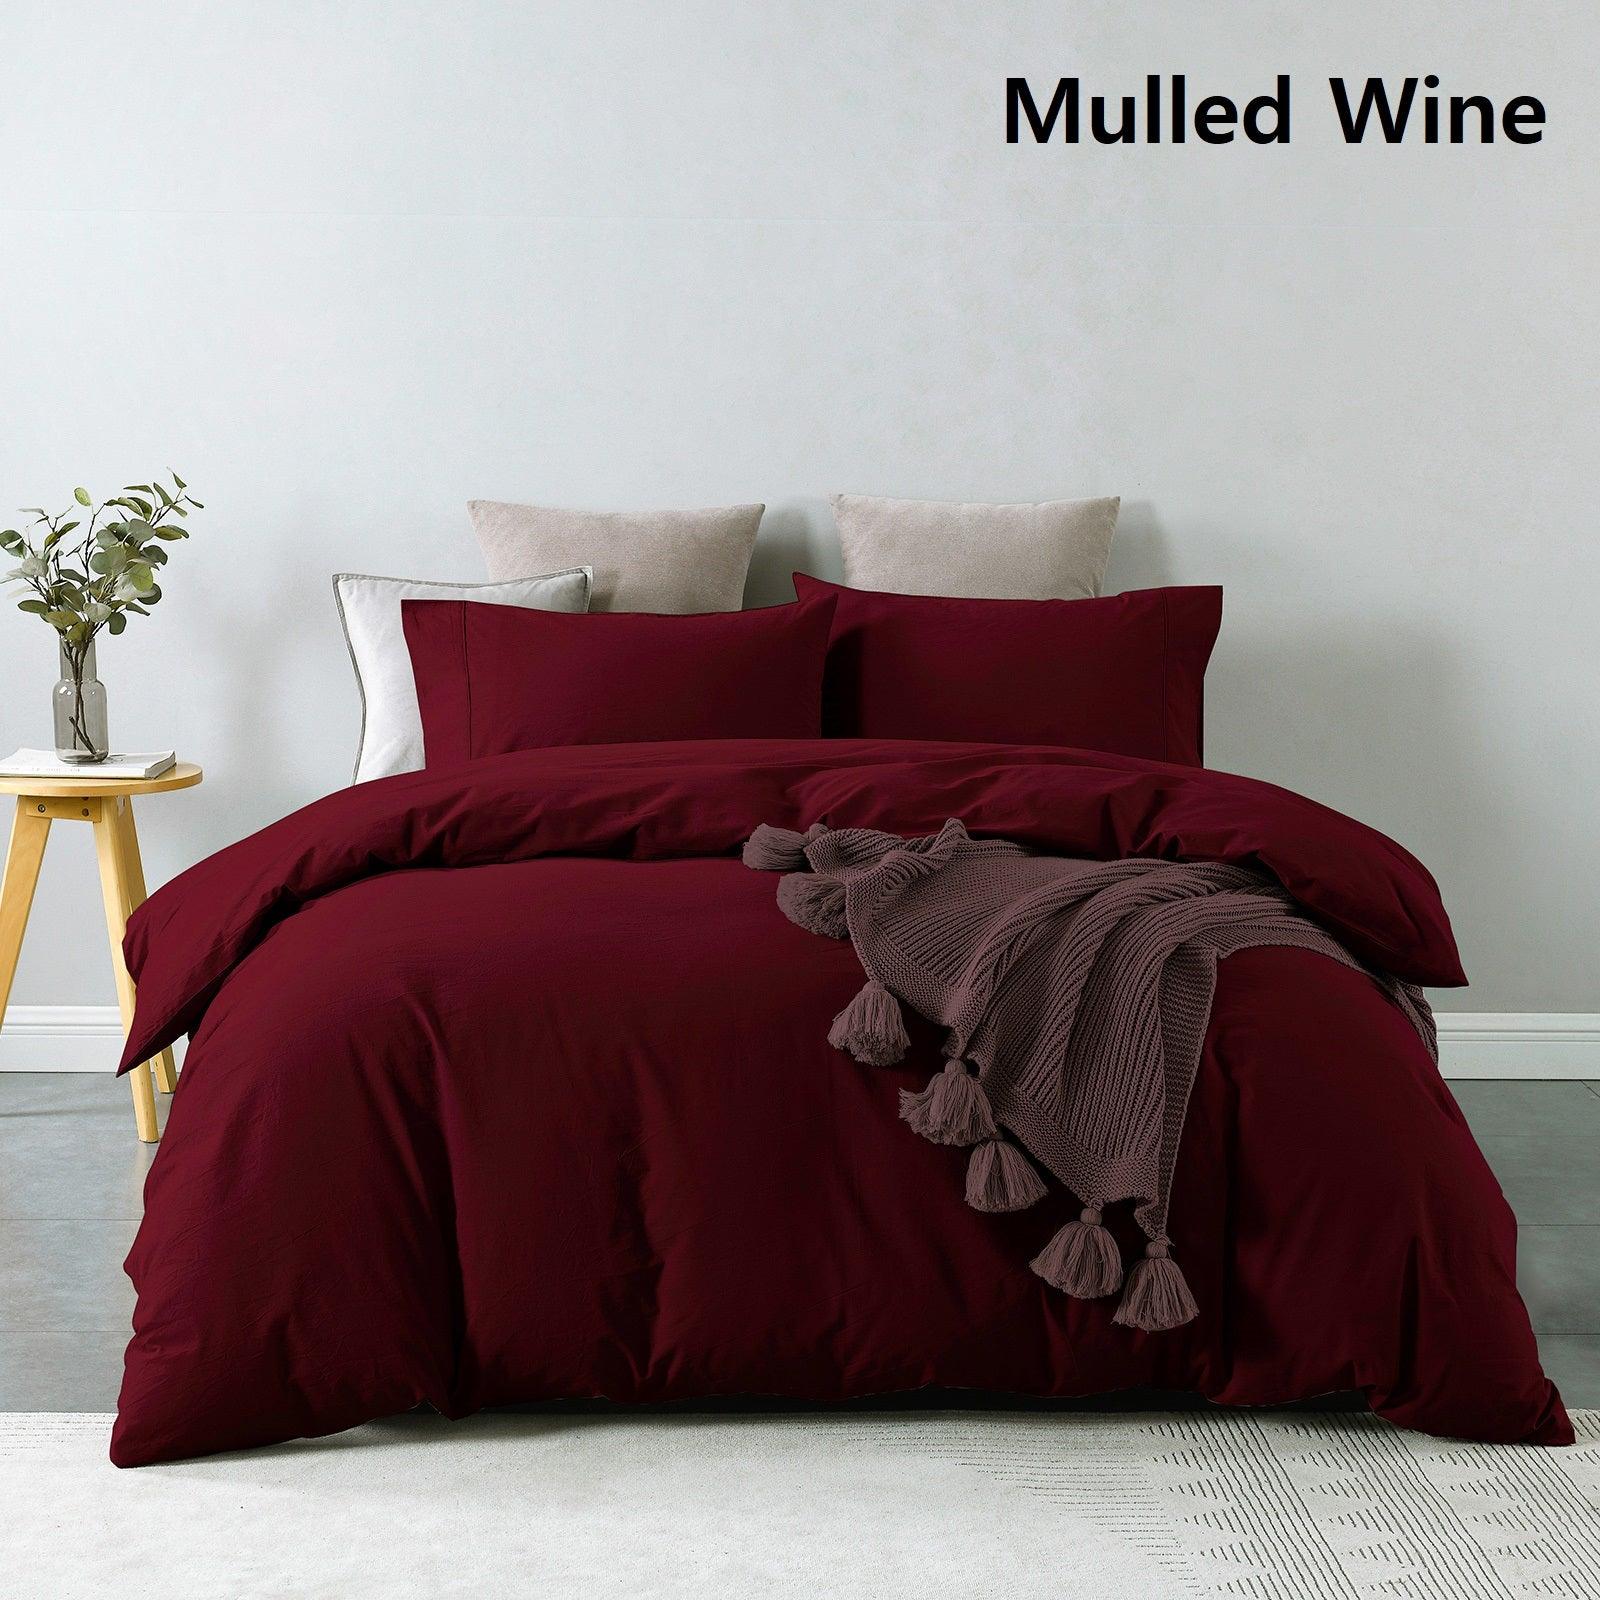 Royal Comfort Vintage Washed 100% Cotton Quilt Cover Set Bedding Ultra Soft - King - Mulled Wine